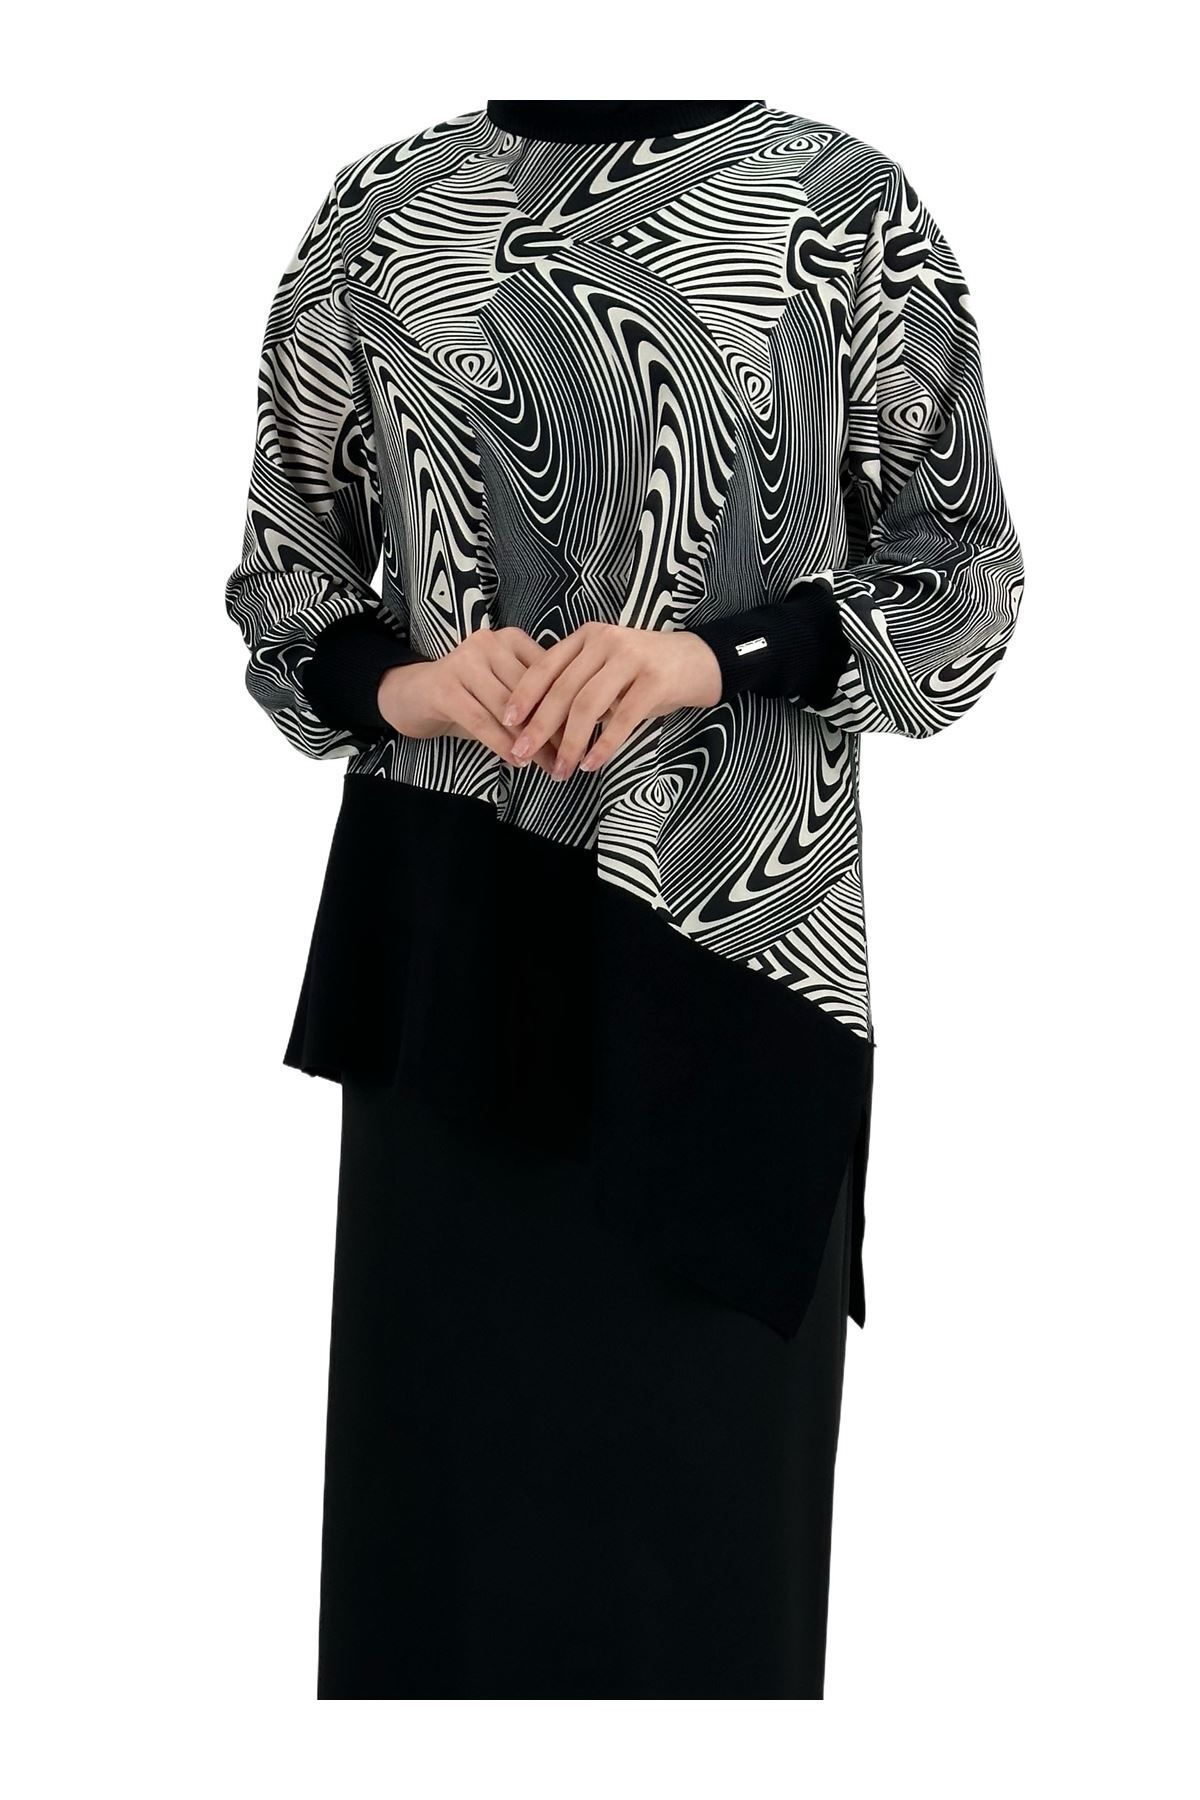 ottoman wear OTW5232 Desenli Tunik Siyah